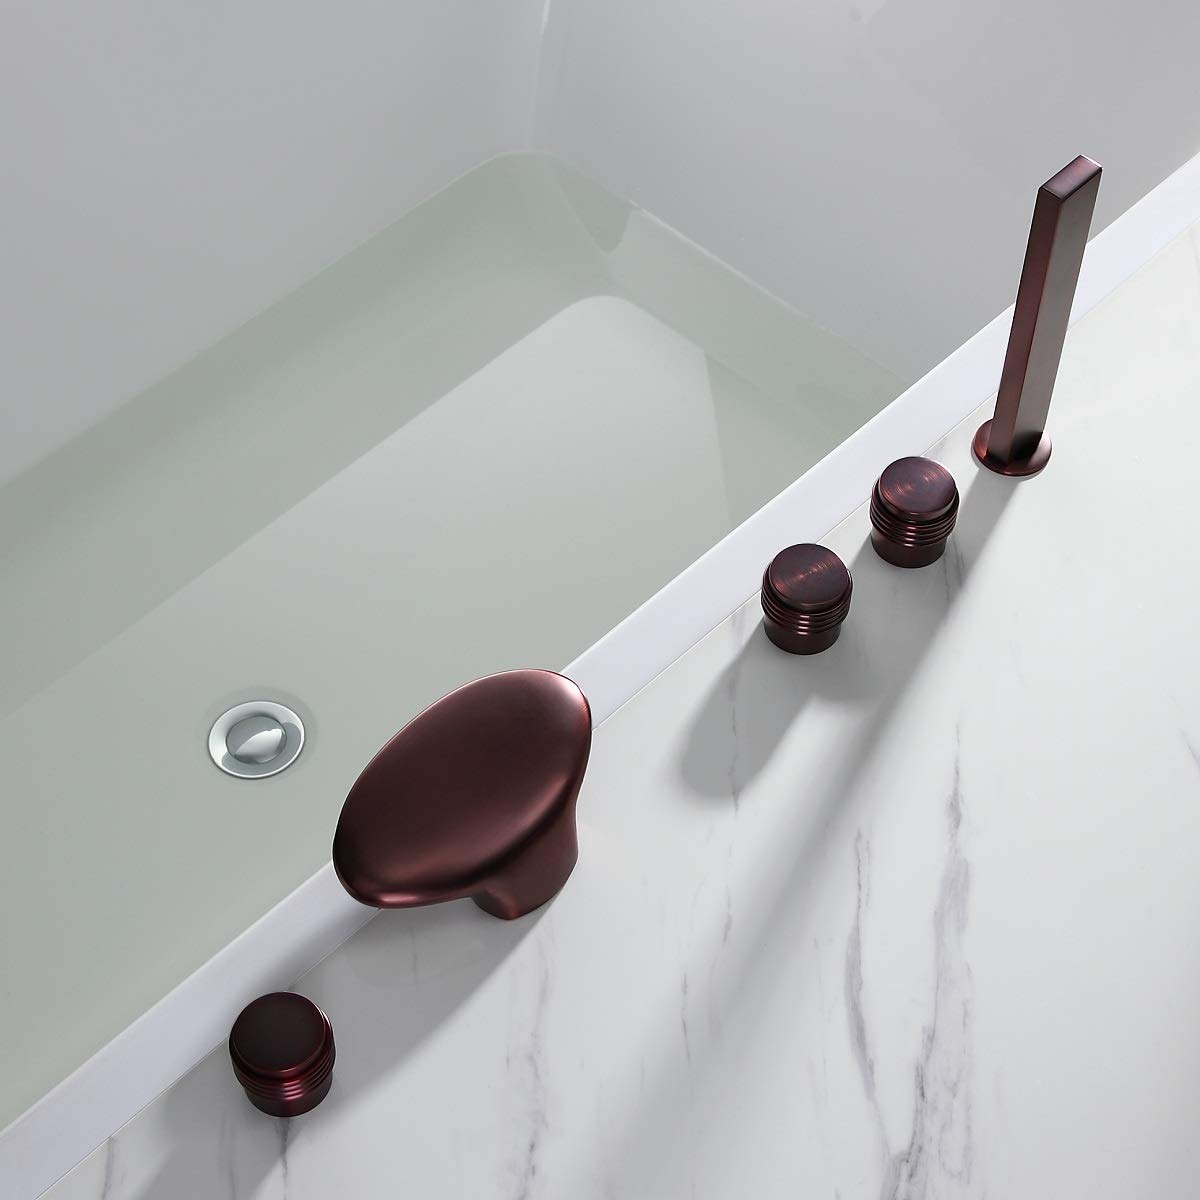 Vincci Oil Rubbed Bronze Widespread Bathtub Faucet